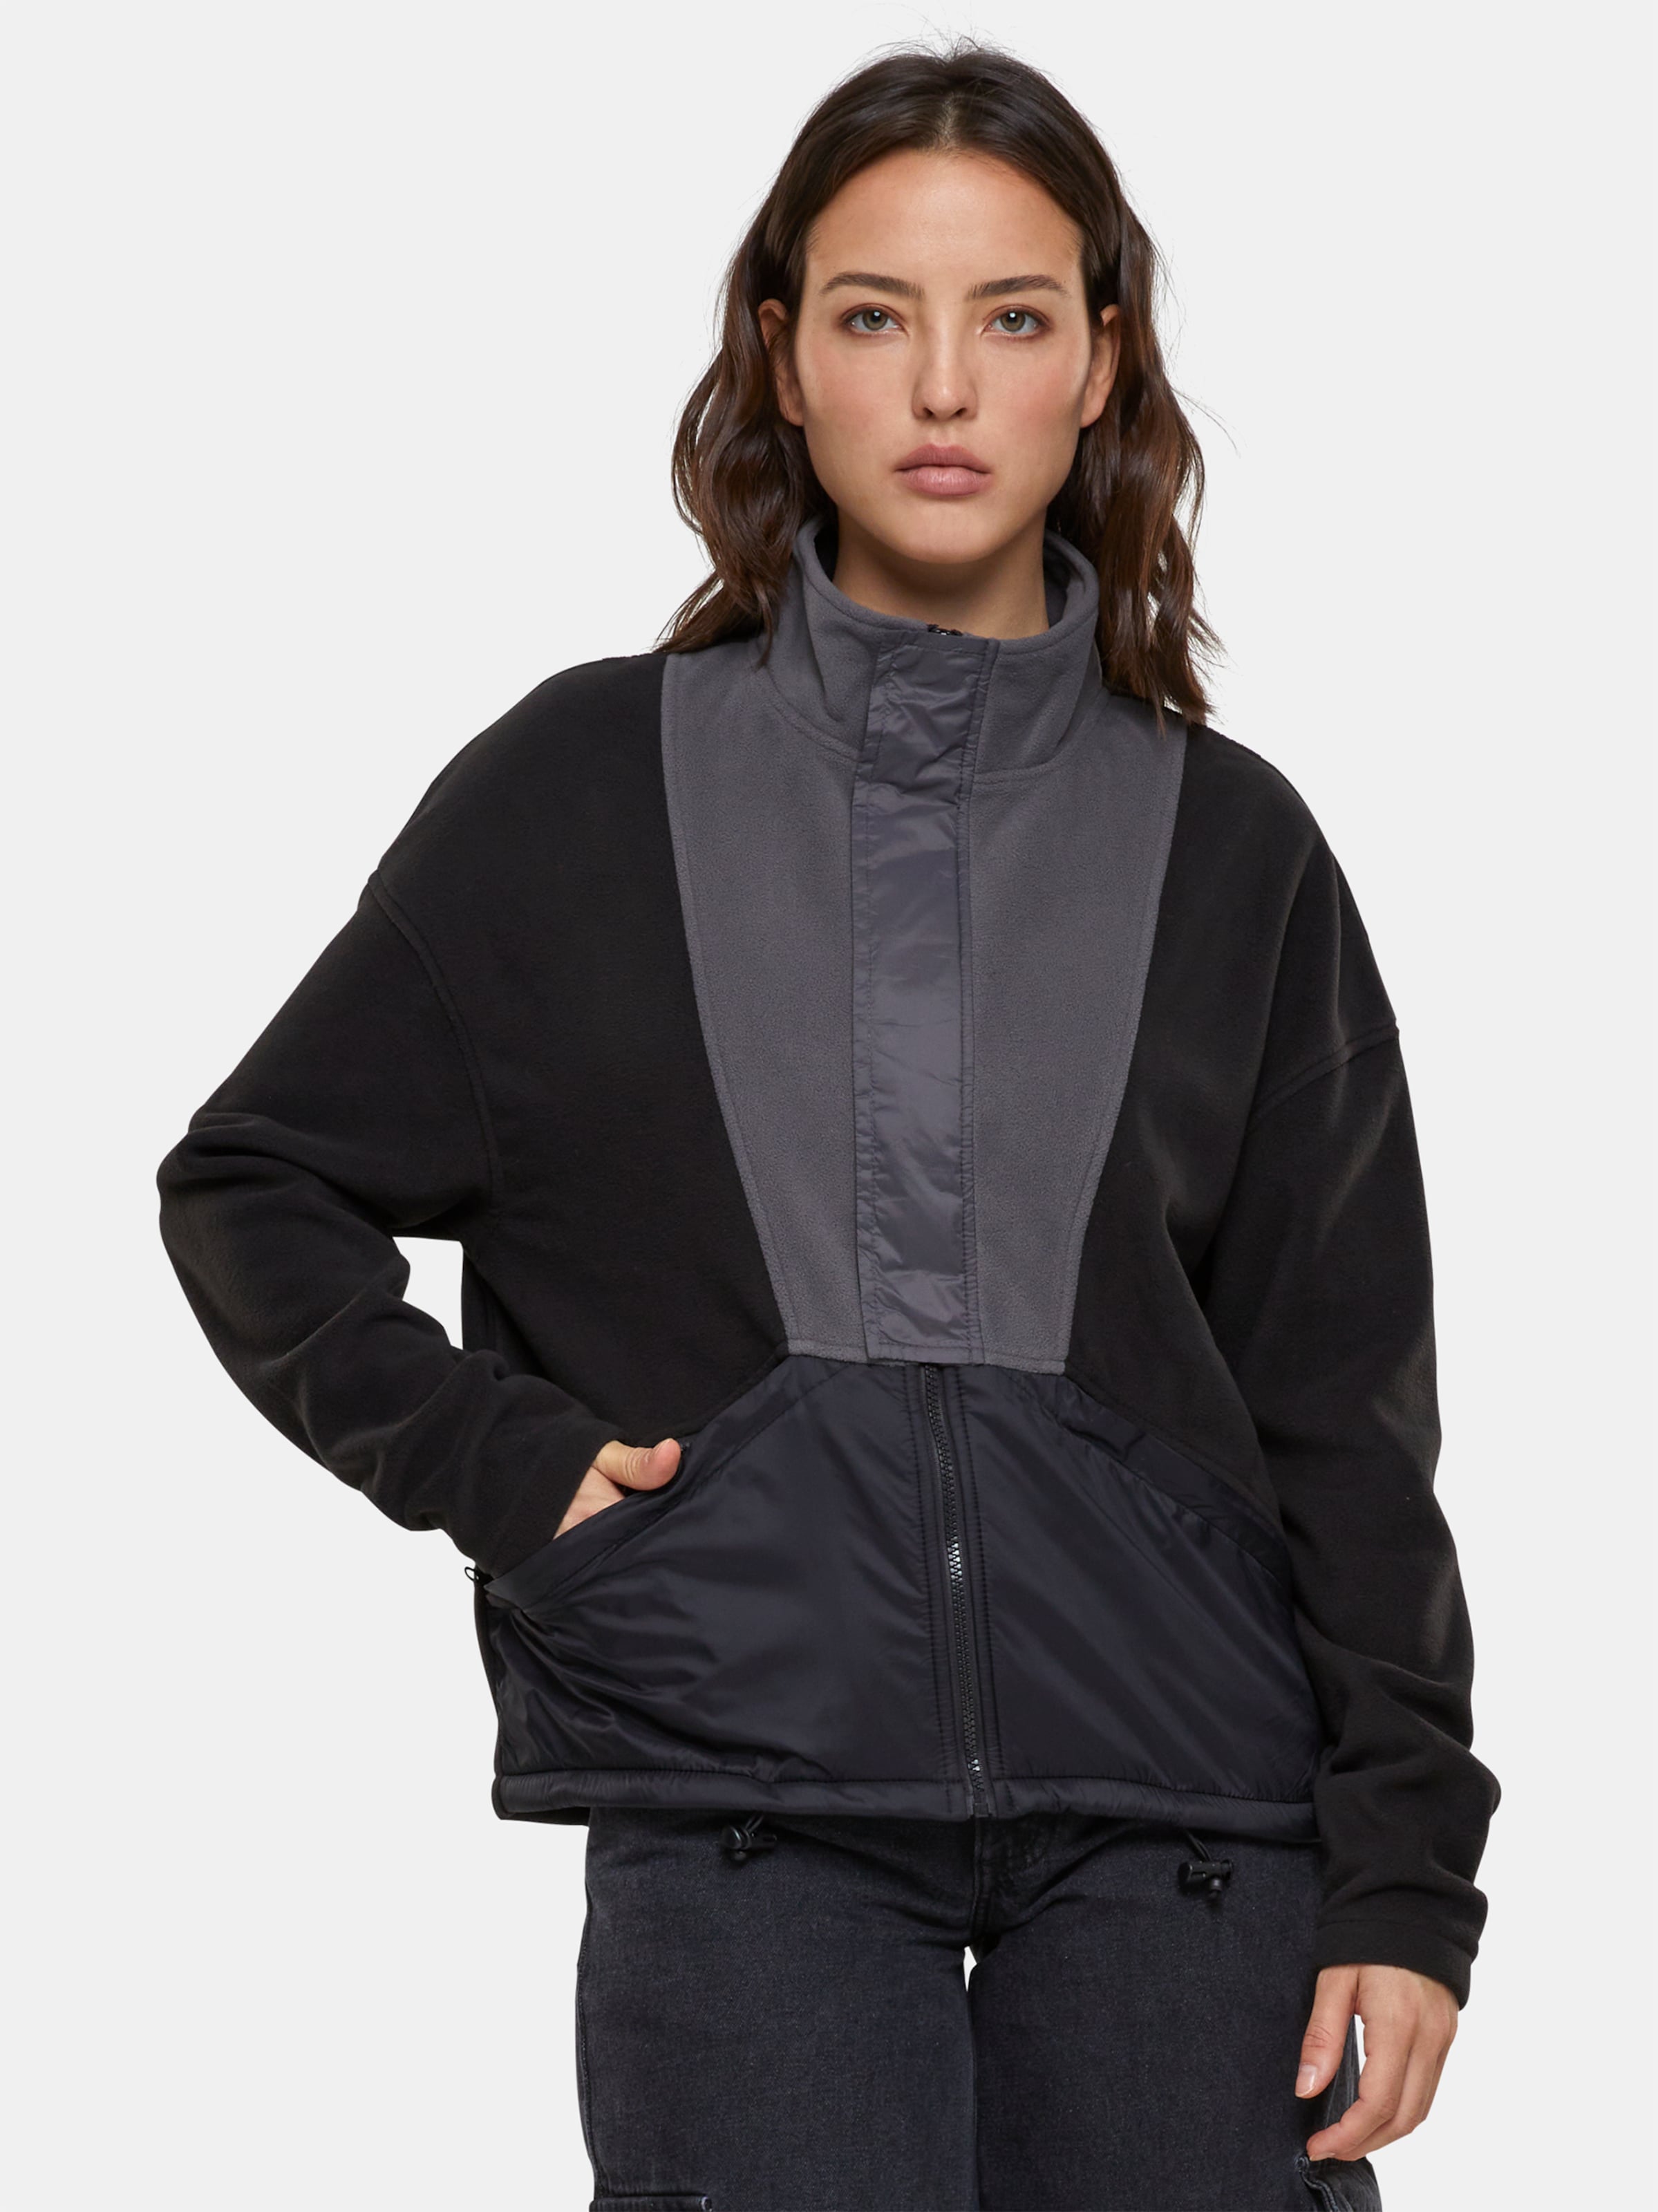 Urban Classics - Polarfleece Trainings jacket - 3XL - Zwart/Grijs